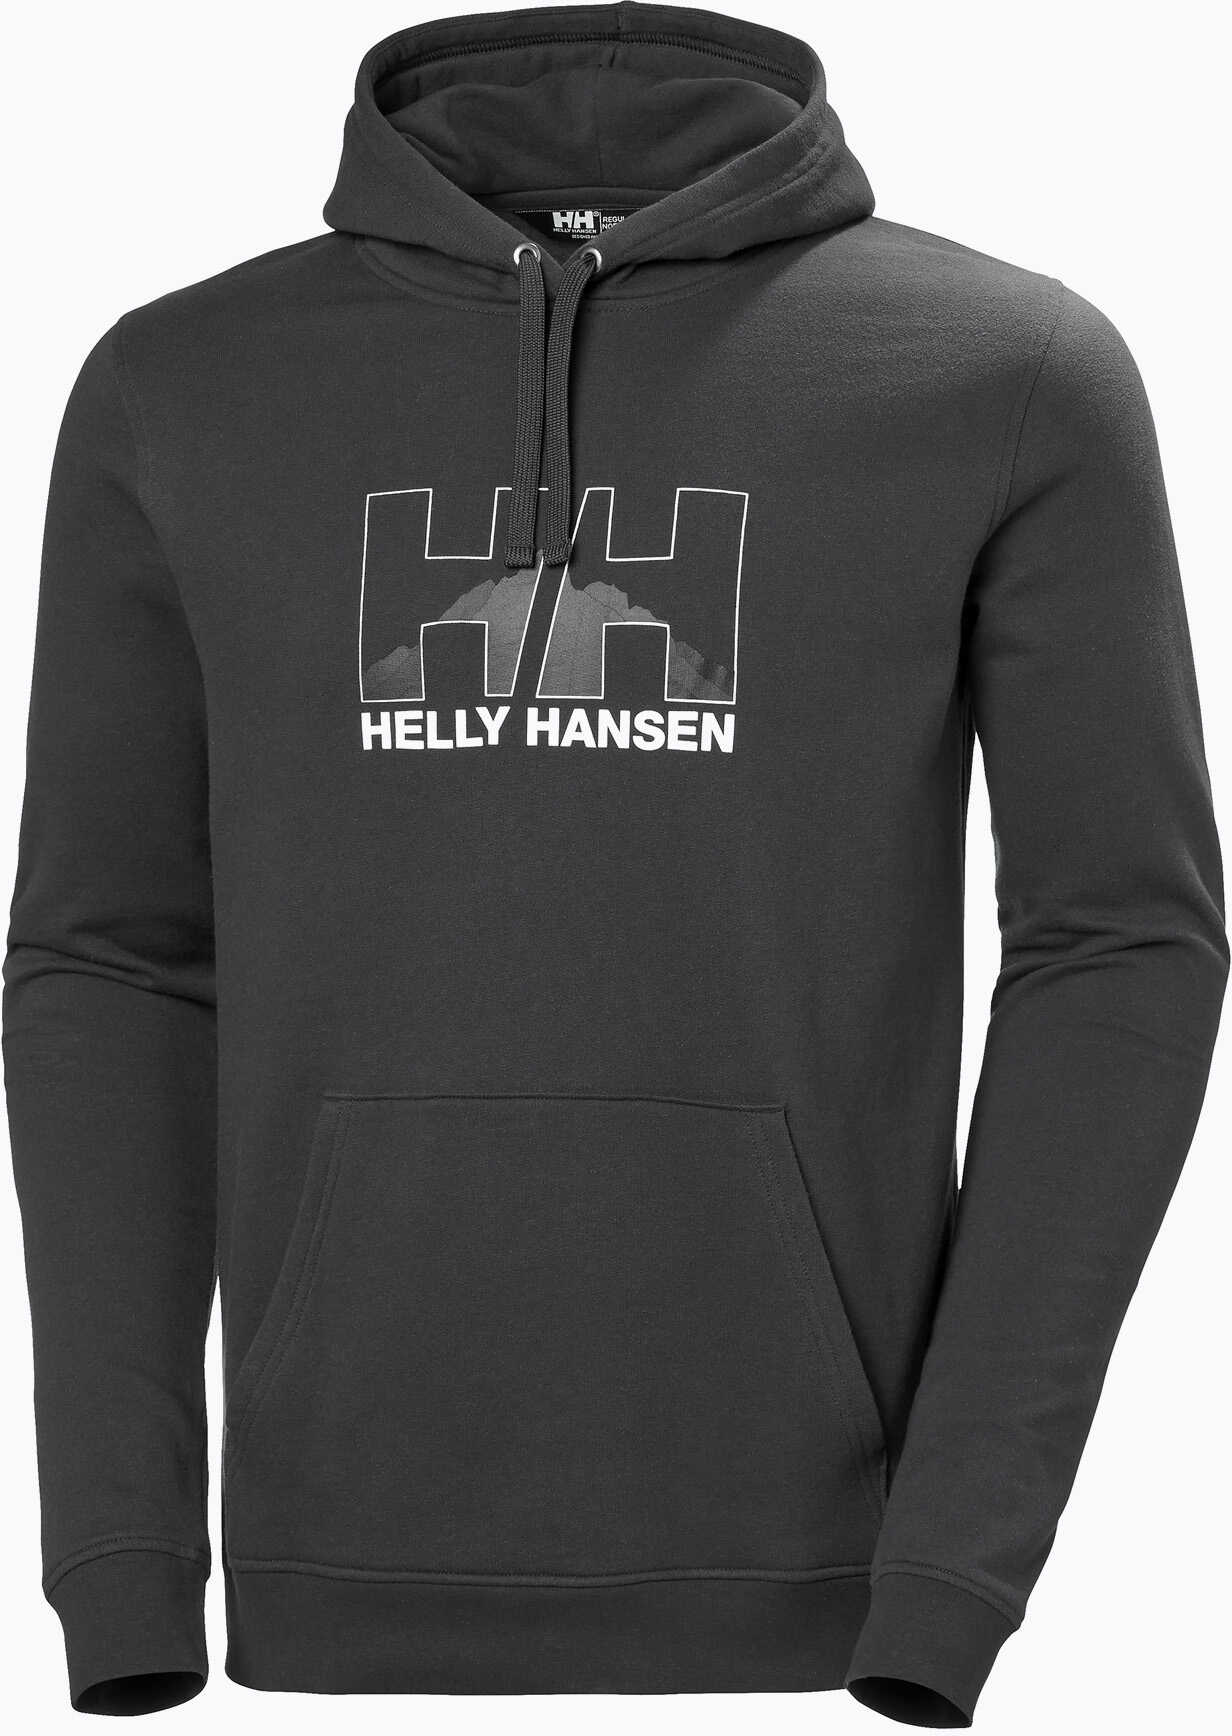 Bluza trekkingowa męska Helly Hansen Nord Graphic Pull Over 981 szara 62975 WYSYŁKA W 24H 30 DNI NA ZWROT